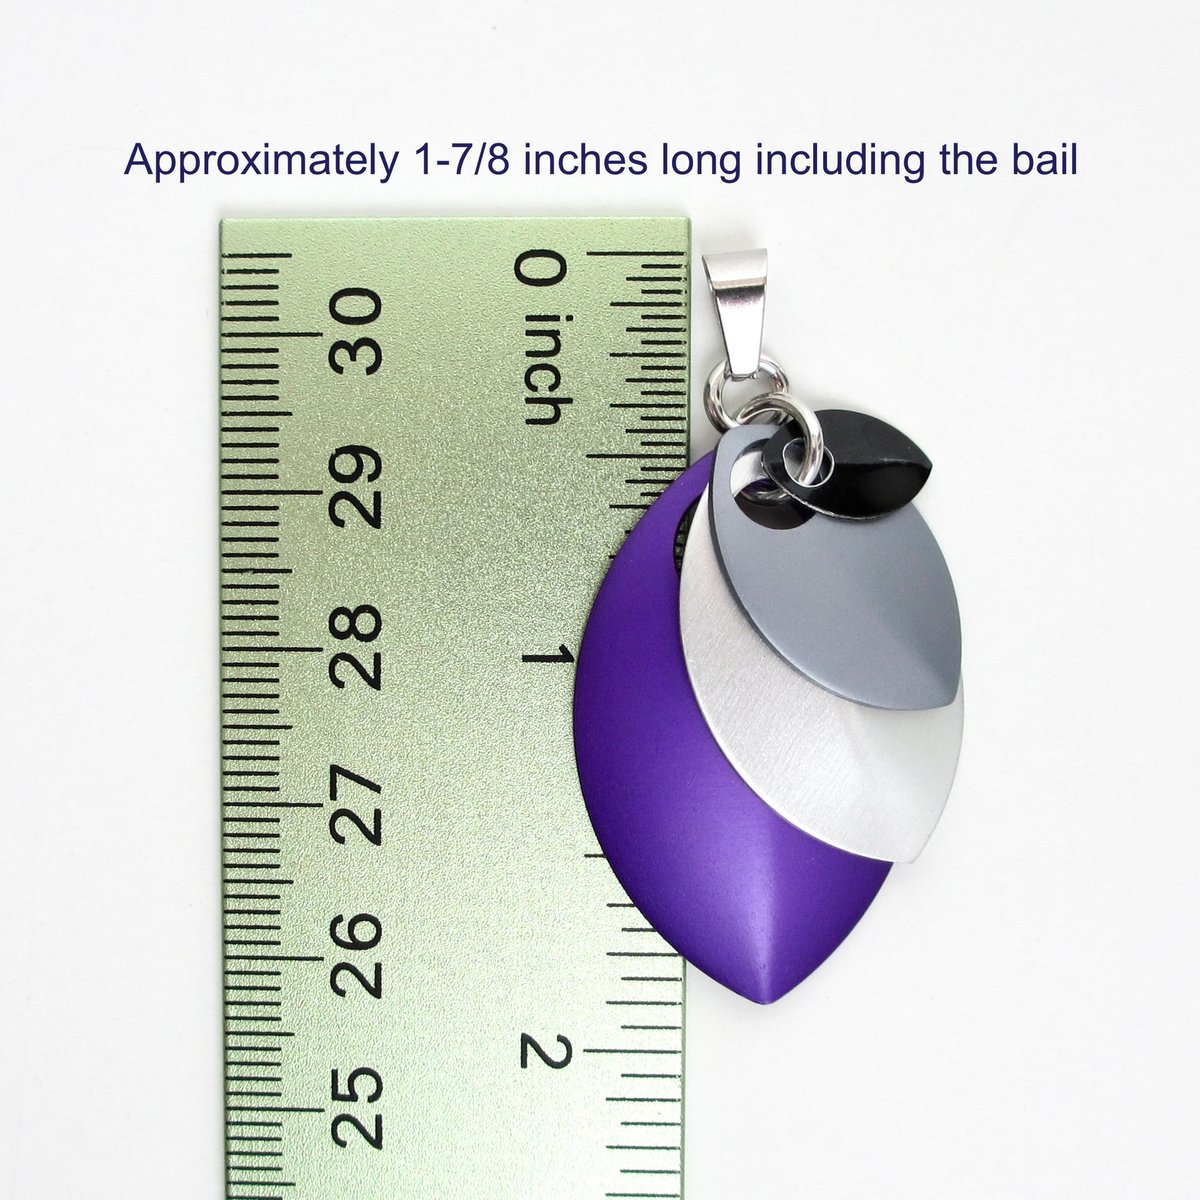 Ace pride chainmail scale pendant, asexual pride jewelry, black gray white purple